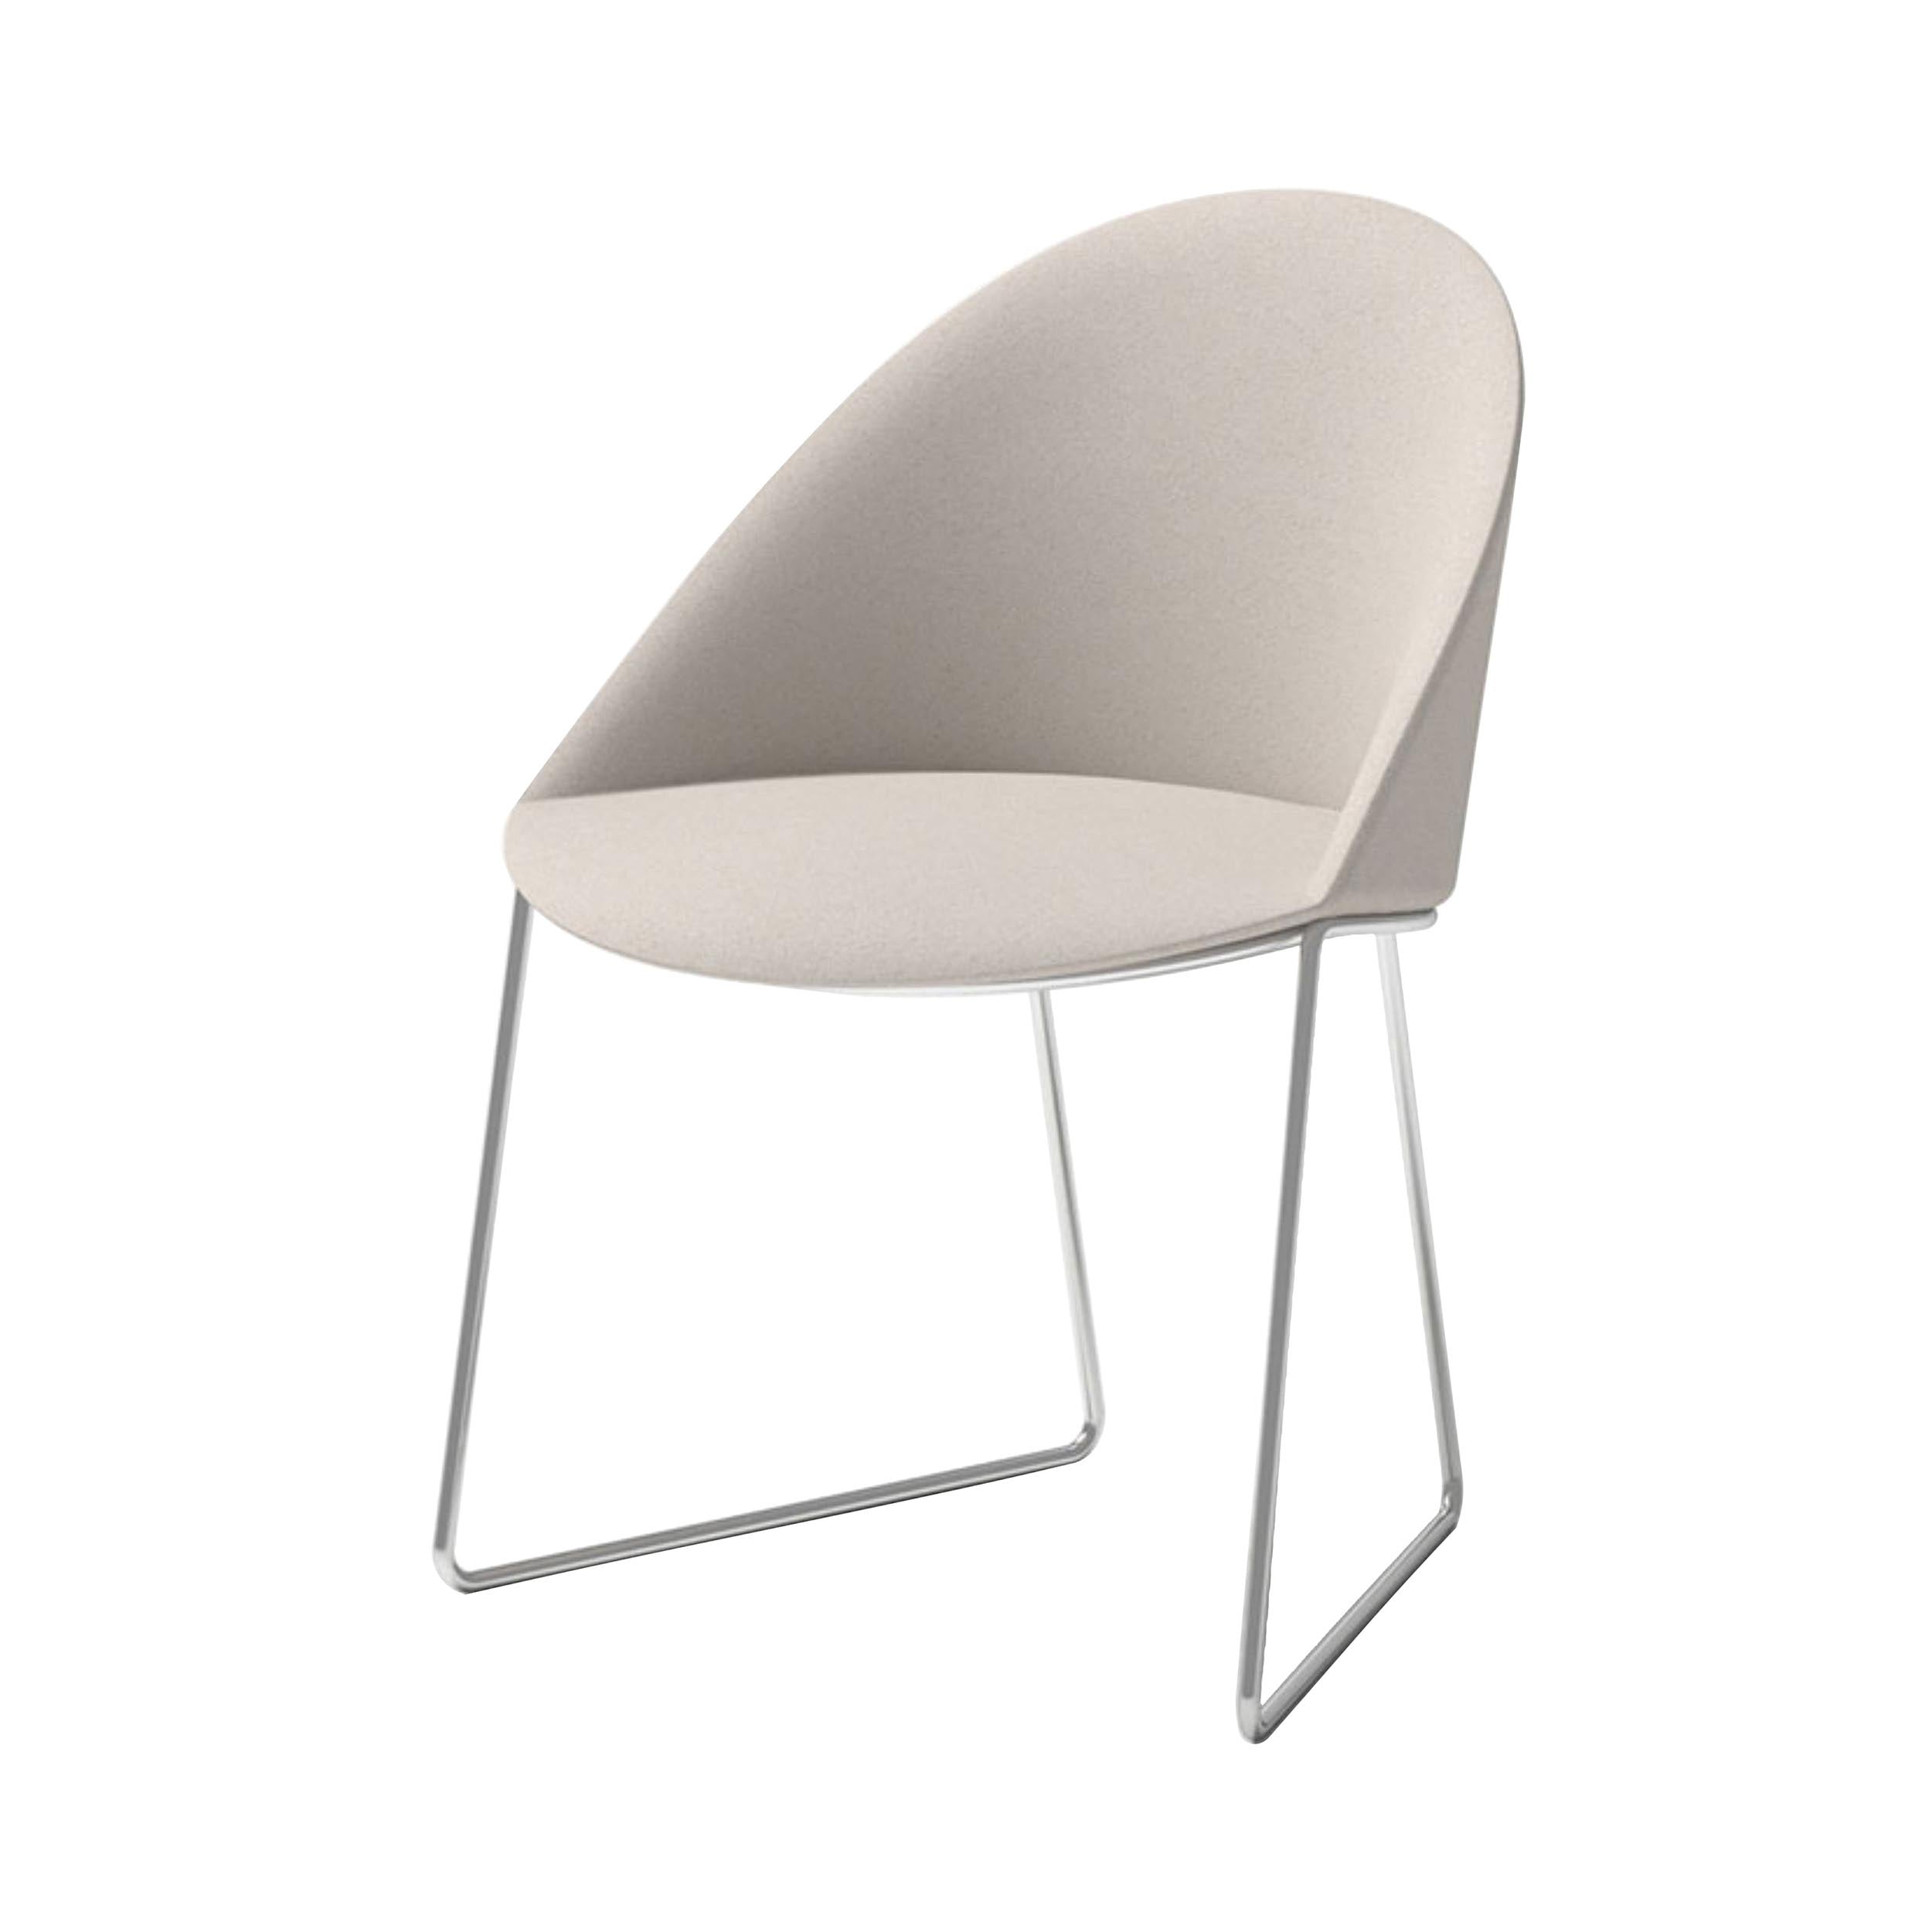 Circa Dining Chair: Sled Base + Chrome